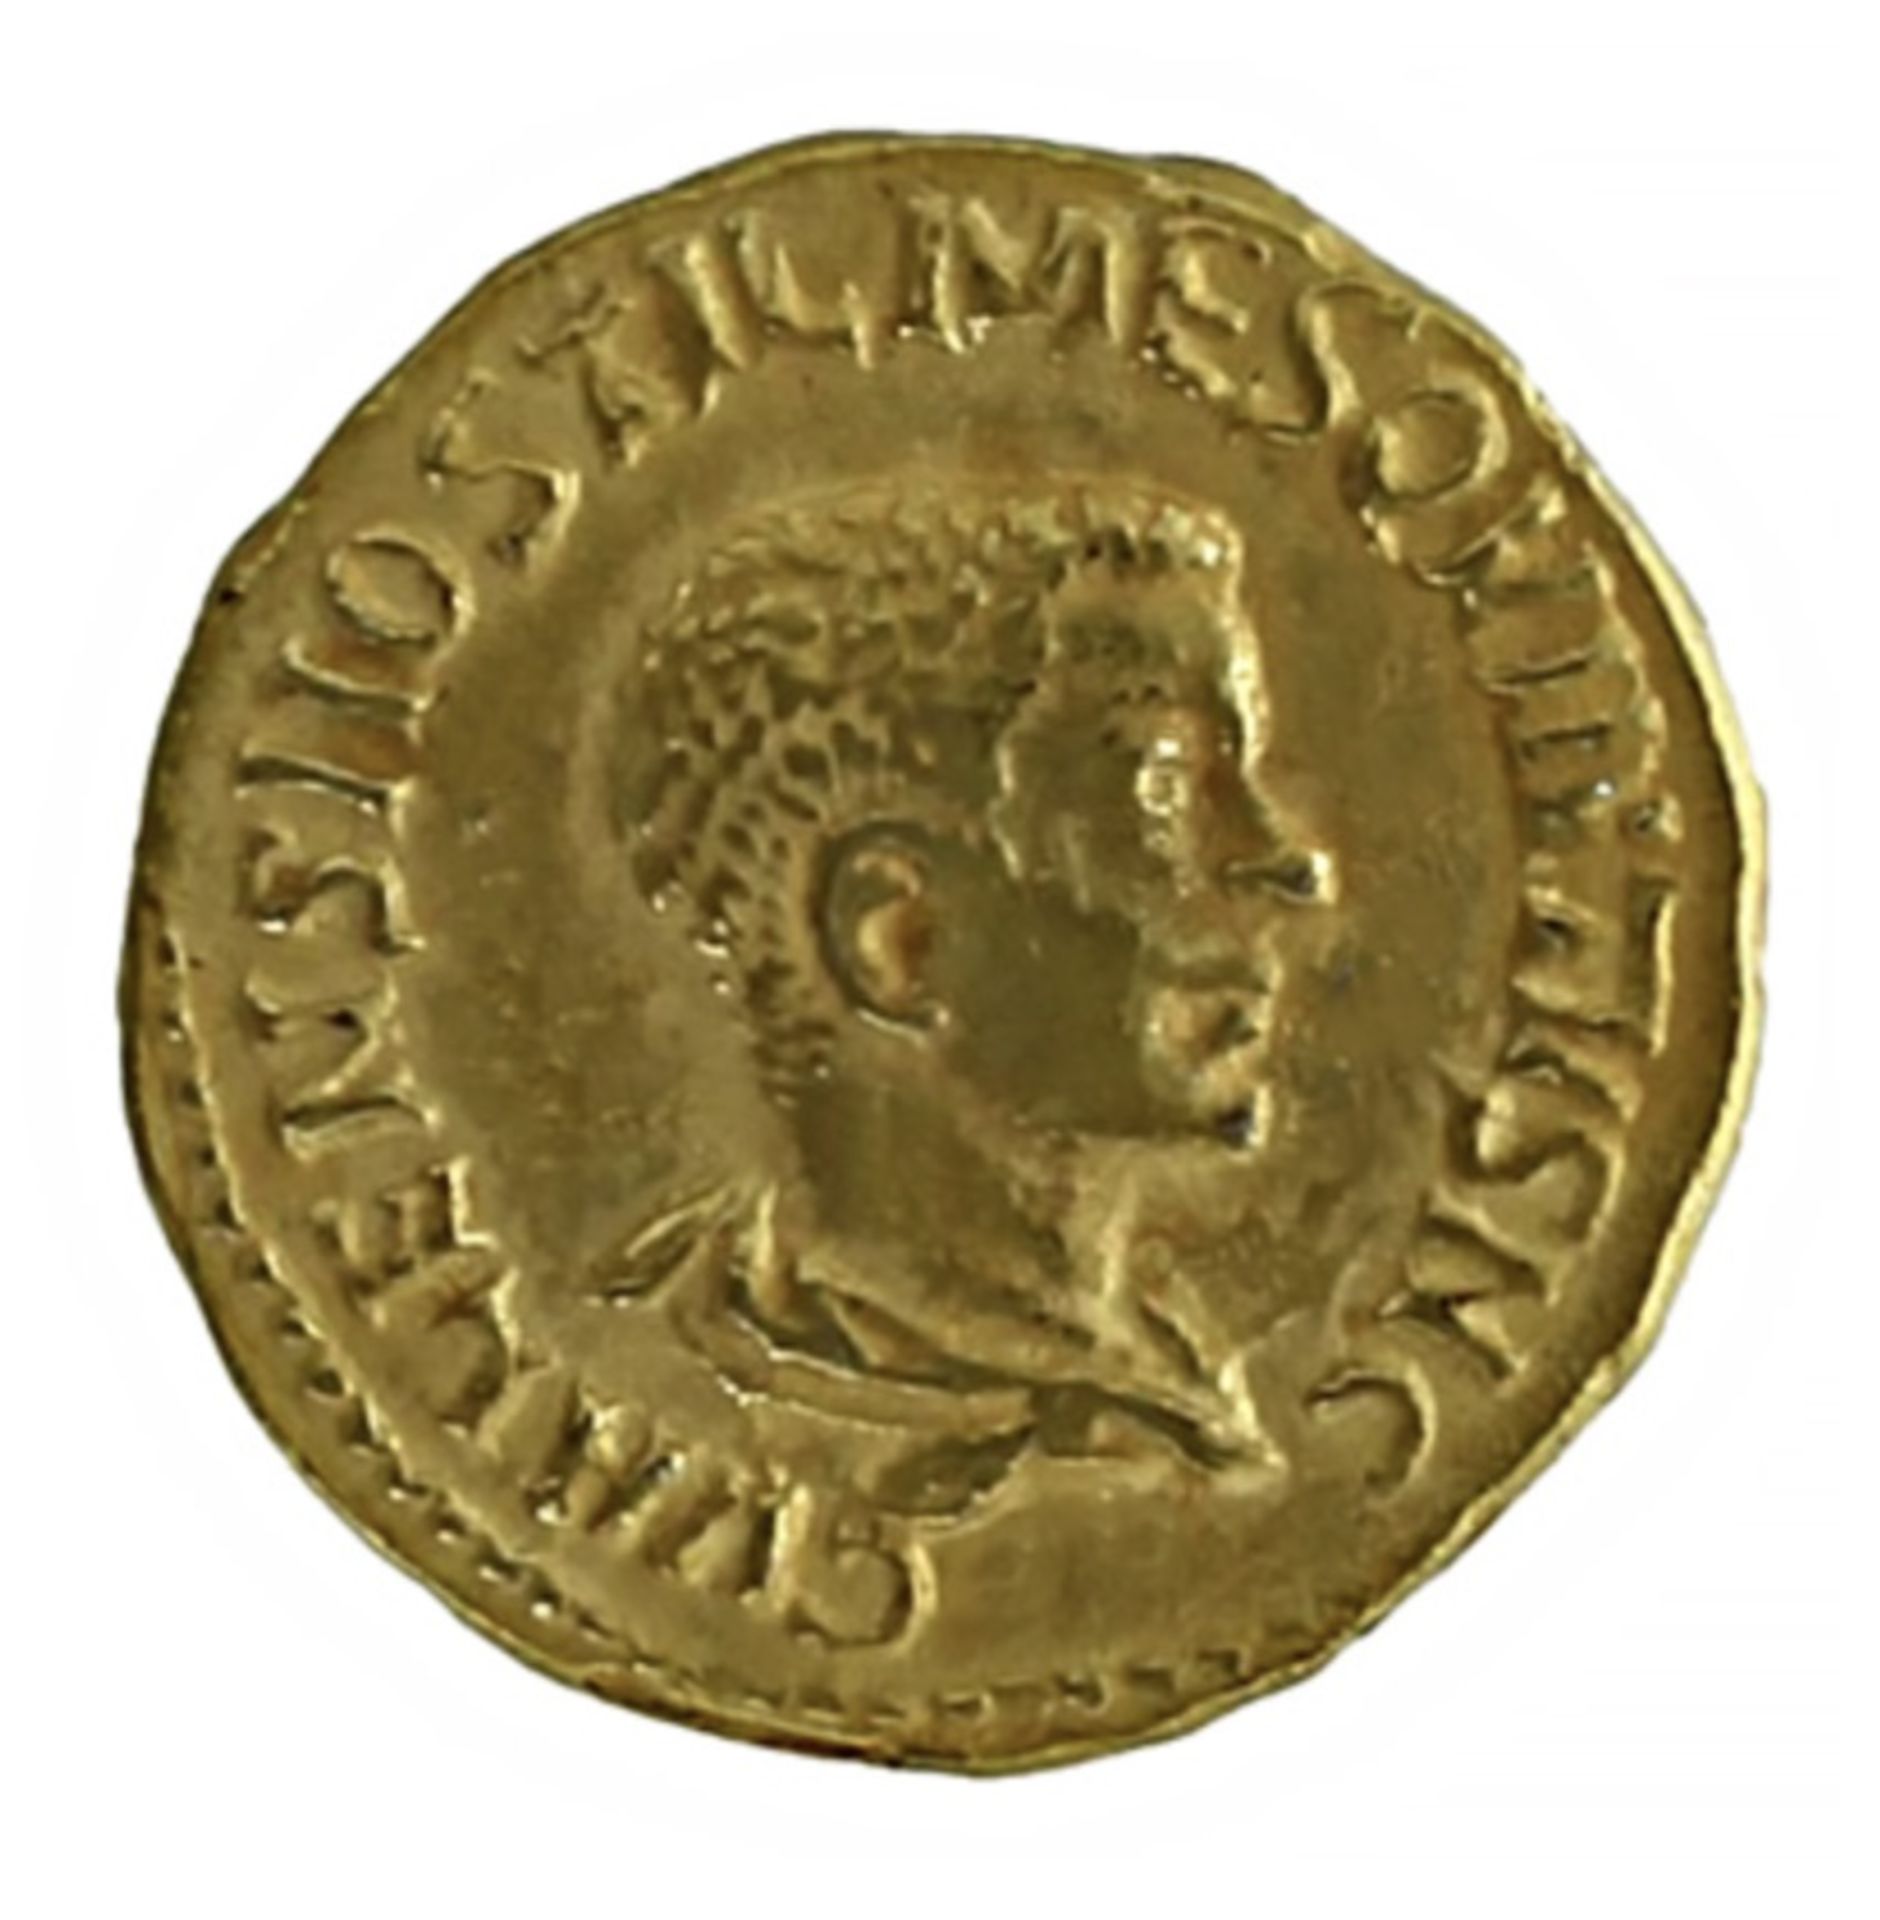 Caesar Hostilian Roman Imperial Gold Aureus Coin